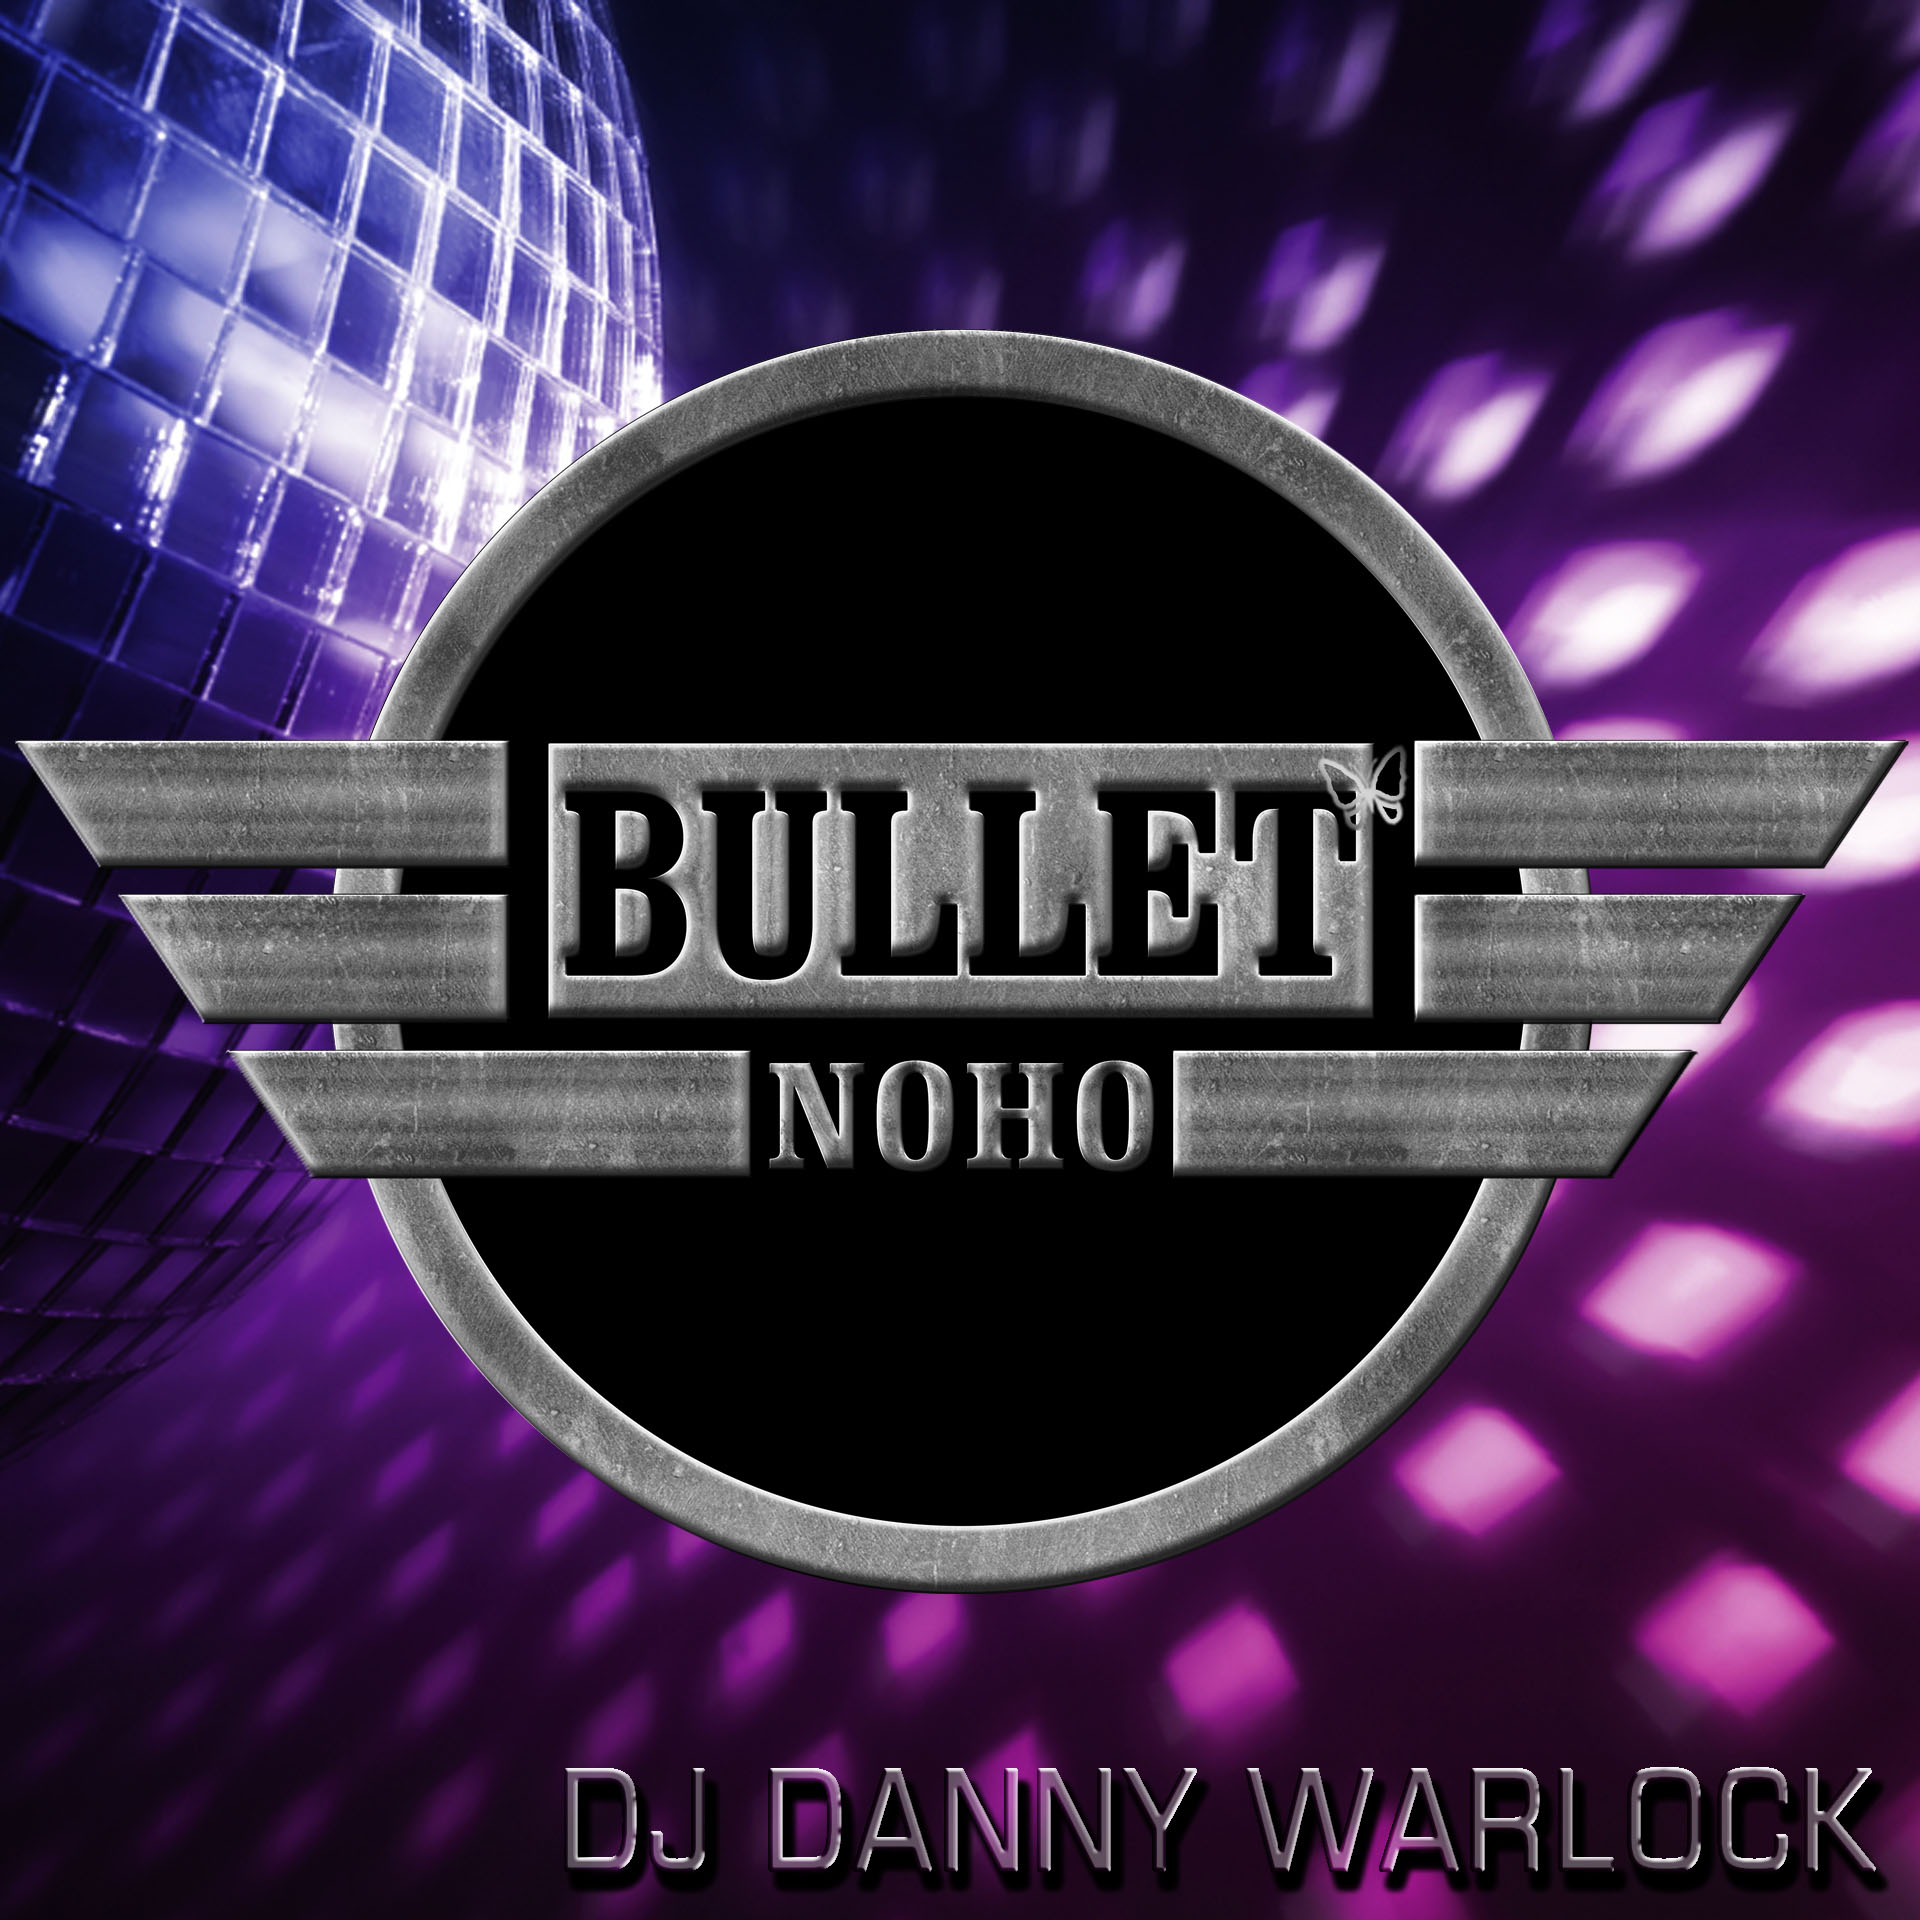 DJ DANNY WARLOCK: Saturday, August 6, 2022 from 8:00 PM to 2:00 AM